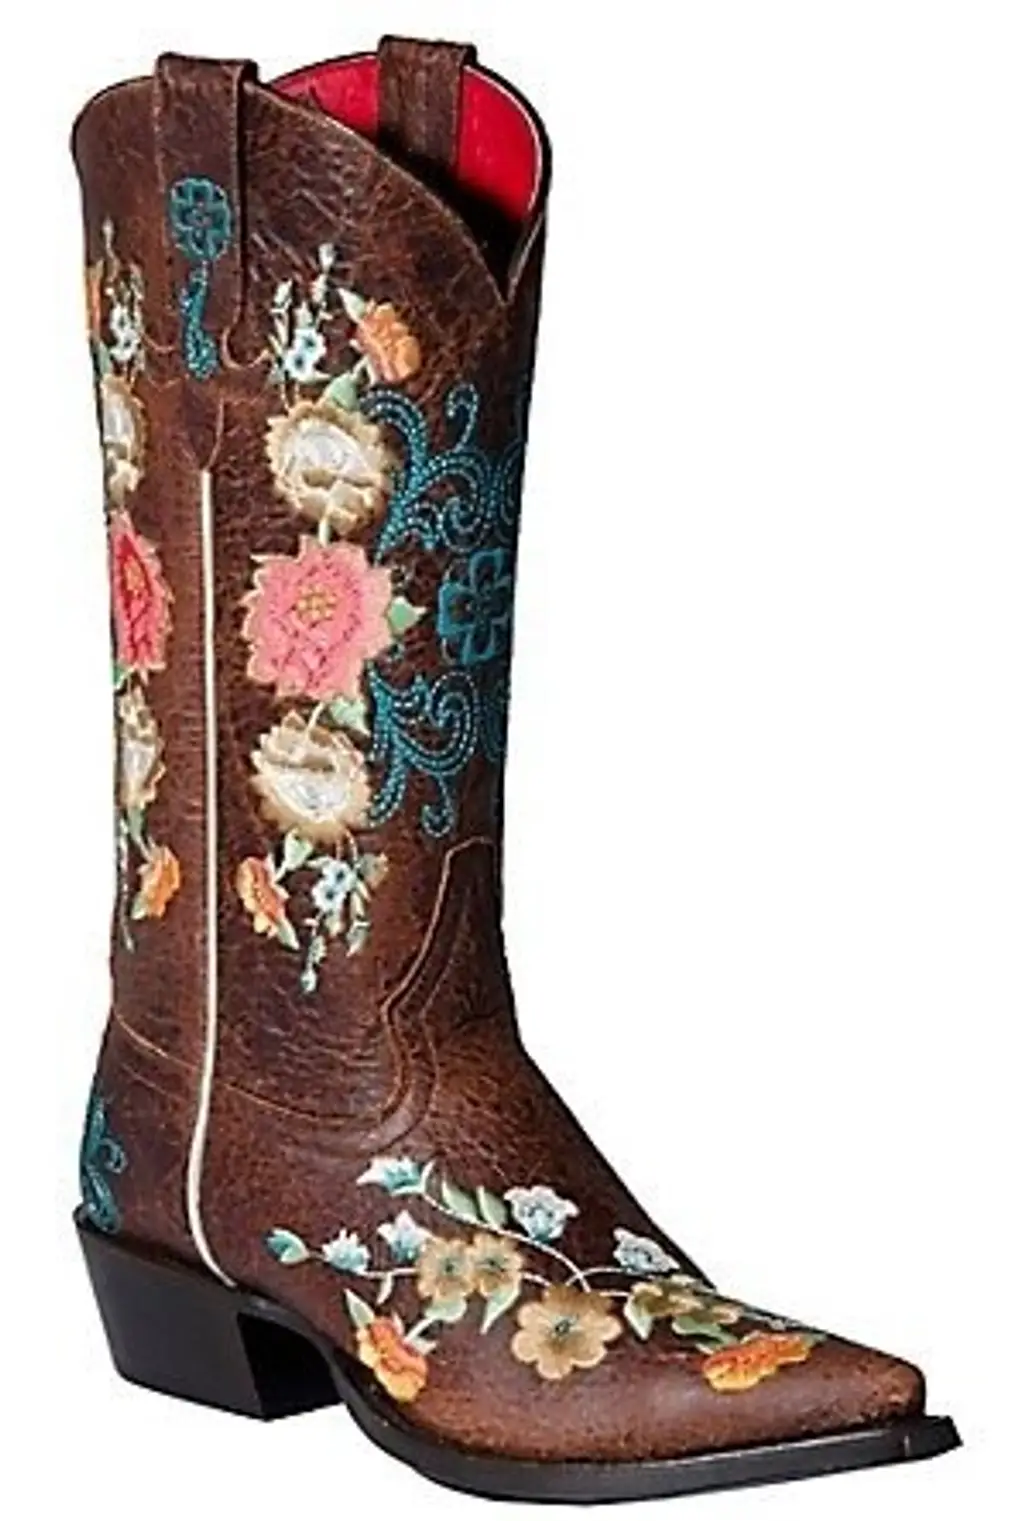 boot,footwear,cowboy boot,shoe,snow boot,